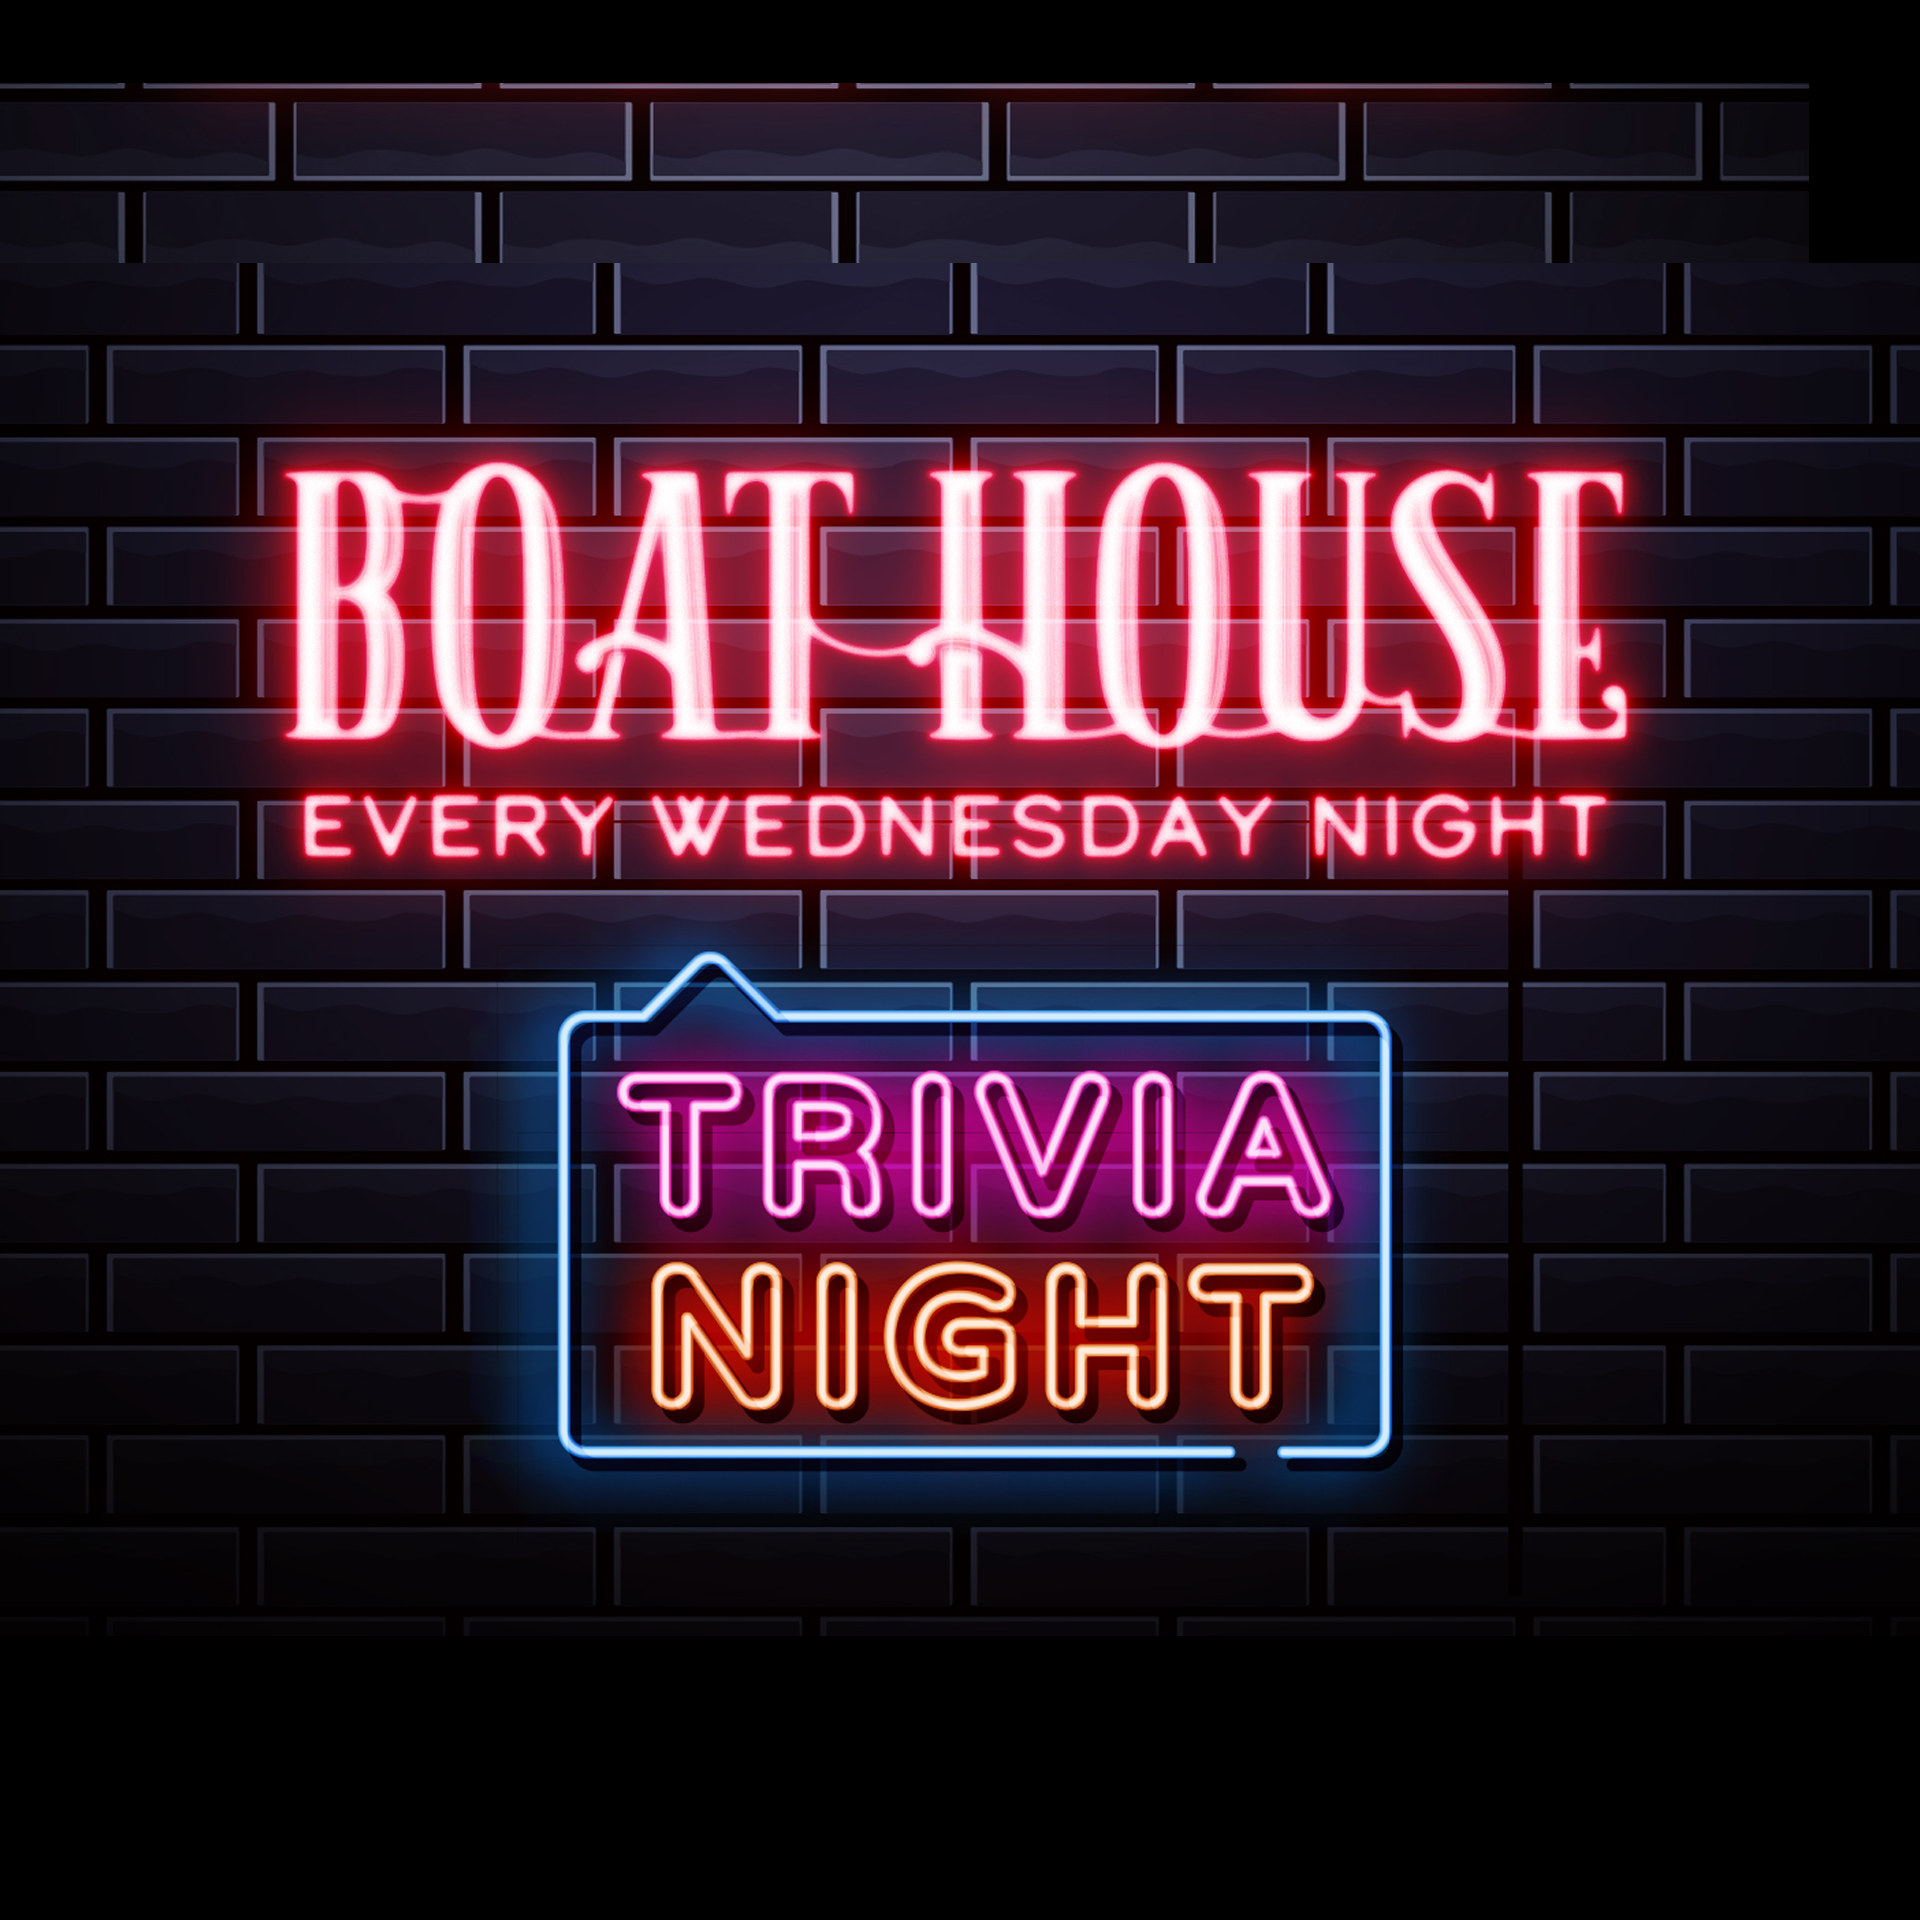 Boat House Trivia Night every Wednesday Night